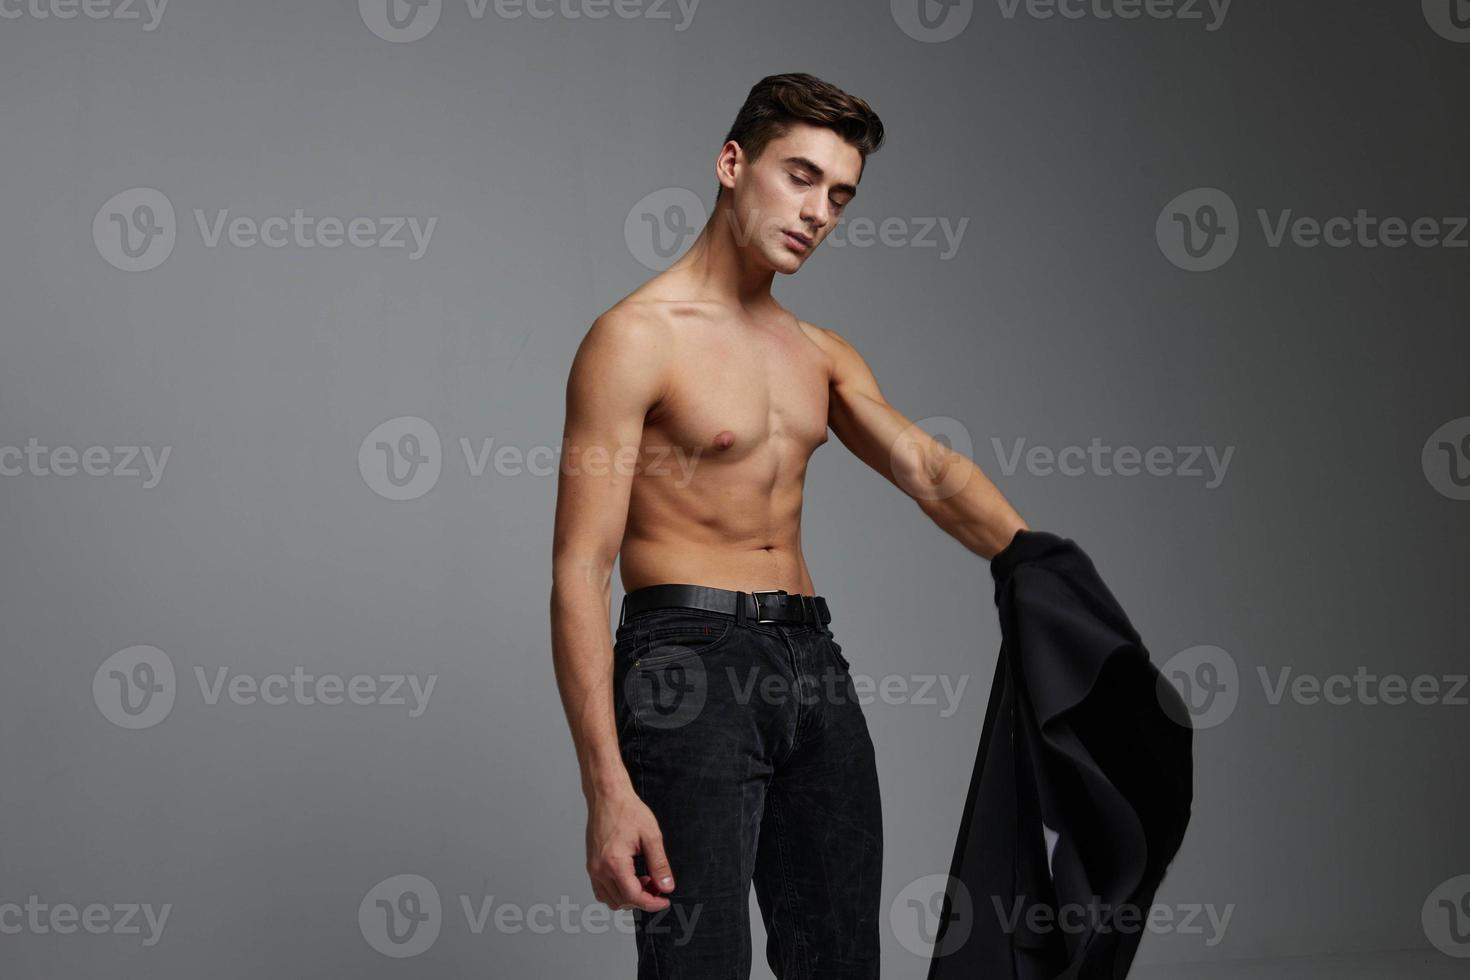 Handsome man nude torso black jacket posing self confidence lifestyle charm photo